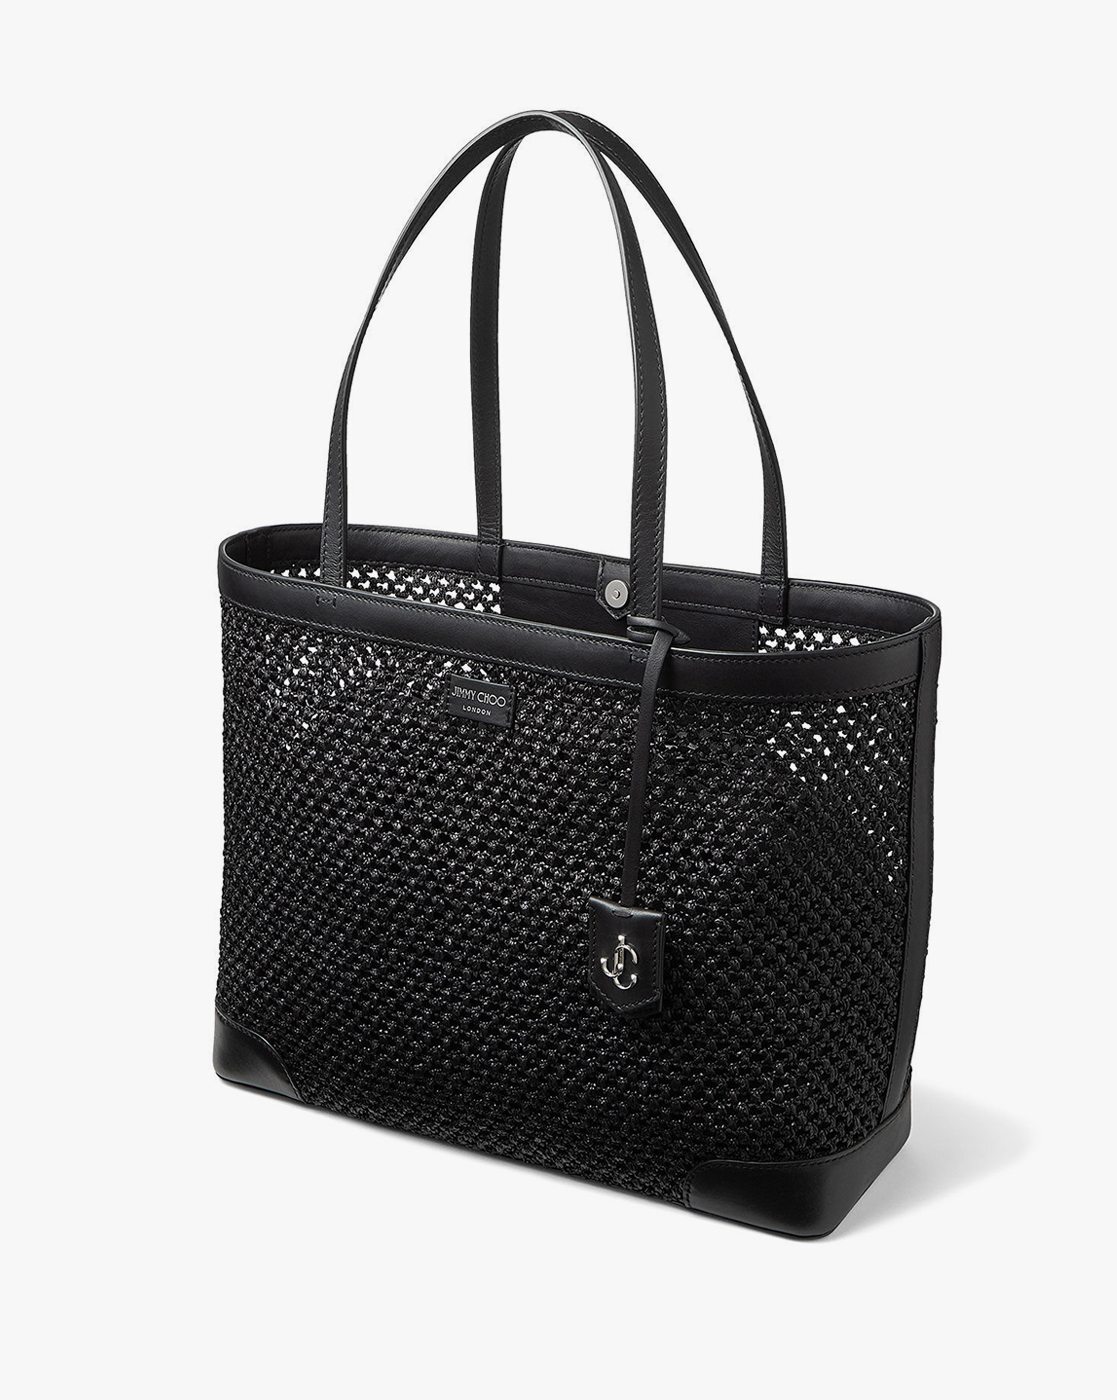 Madeline leather handbag Jimmy Choo Black in Leather - 39149764